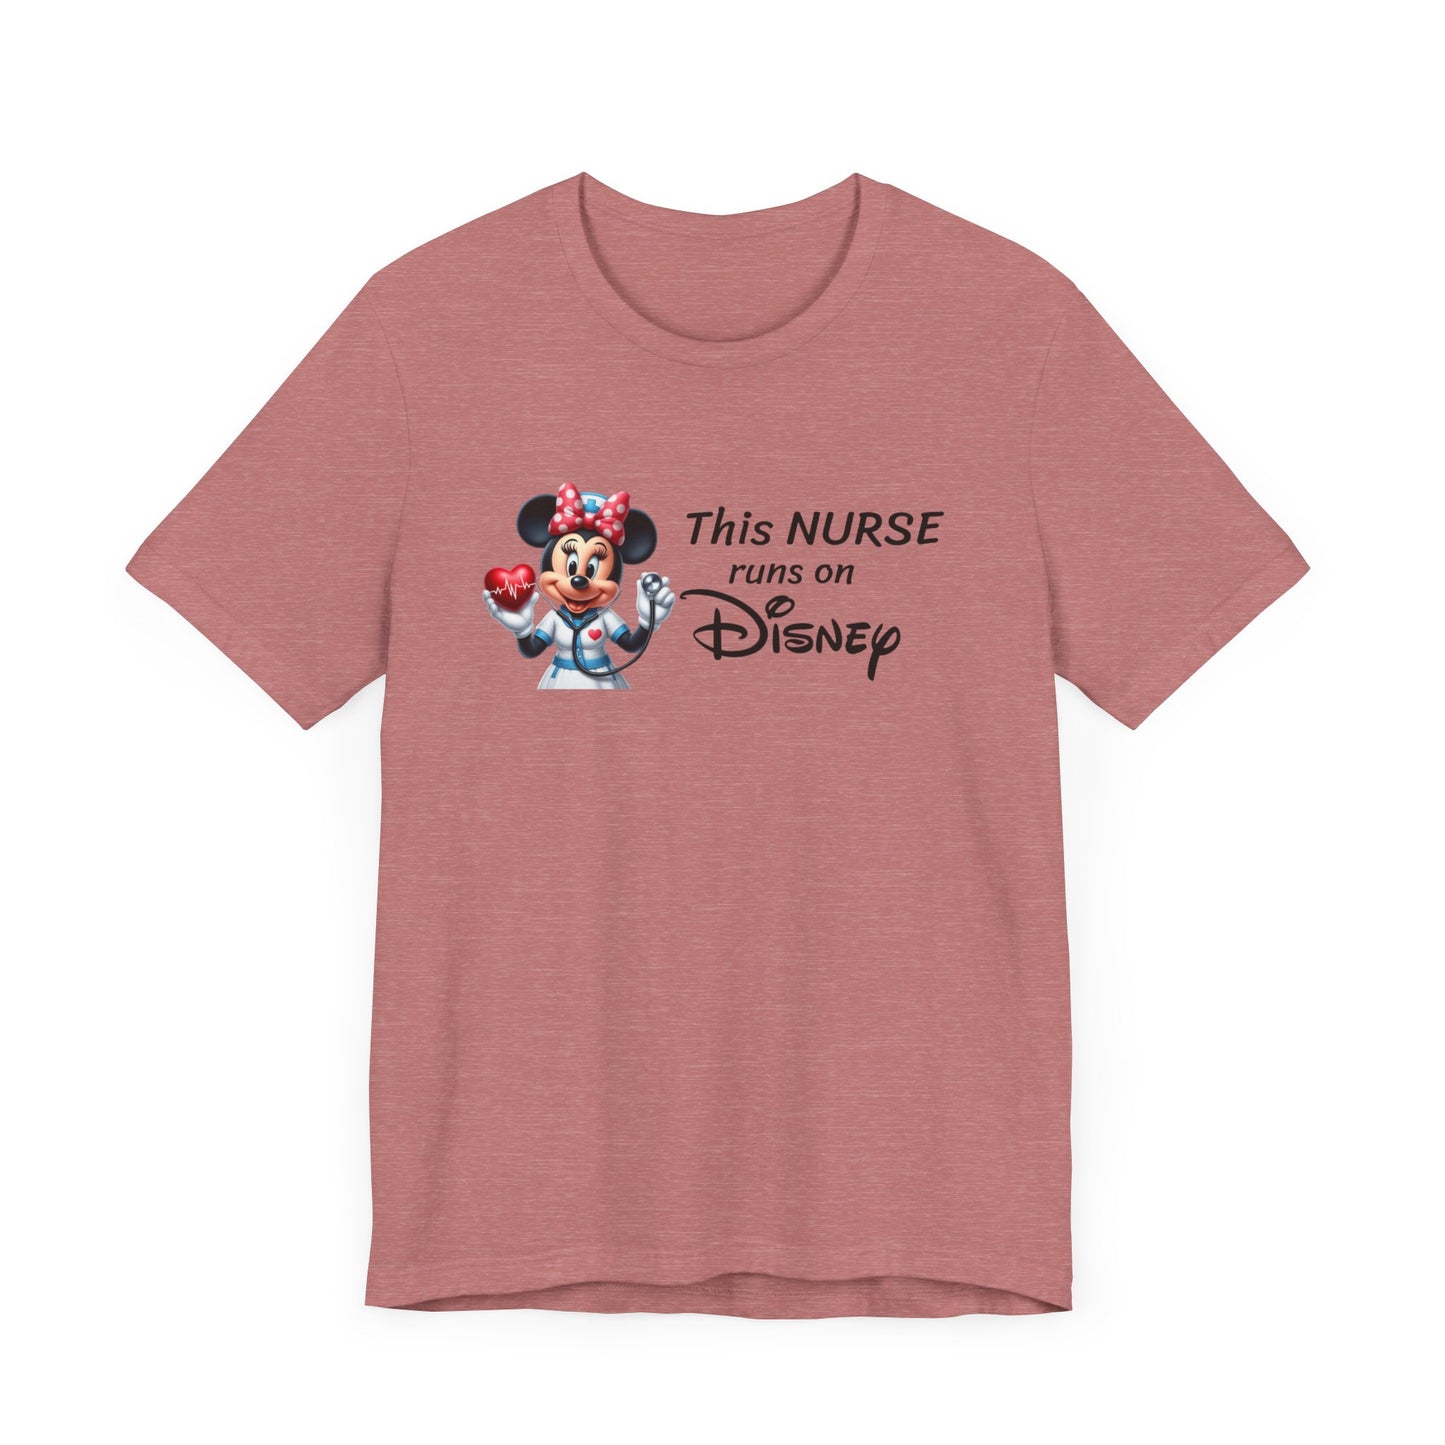 This Nurse runs on Disney- Short Sleeve T-shirt.